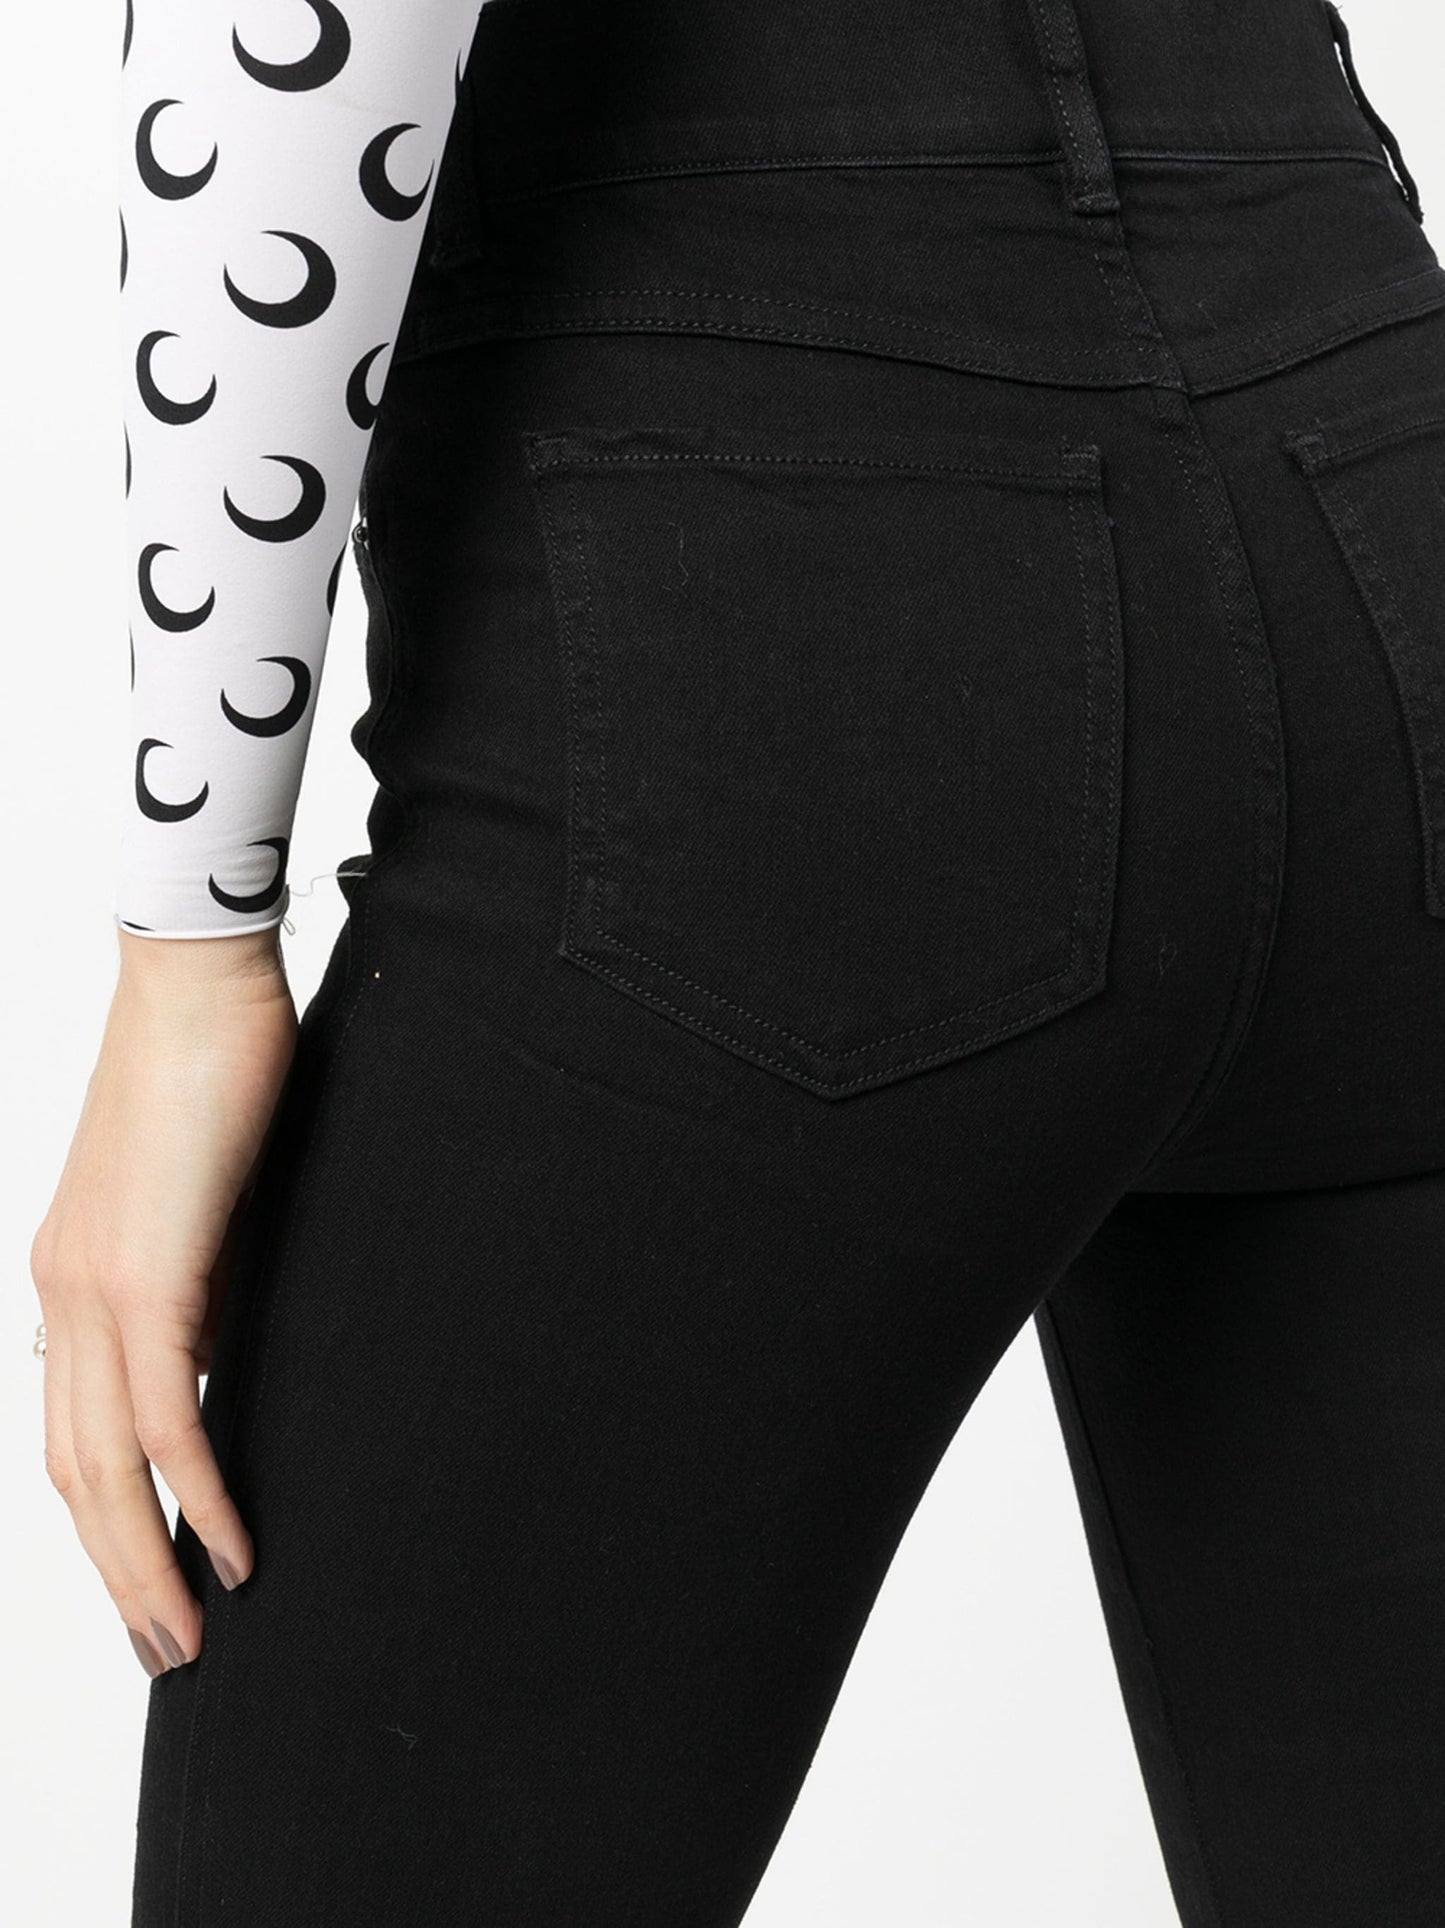 SPANX Women's Flare Denim Jeans Pants Clean Black